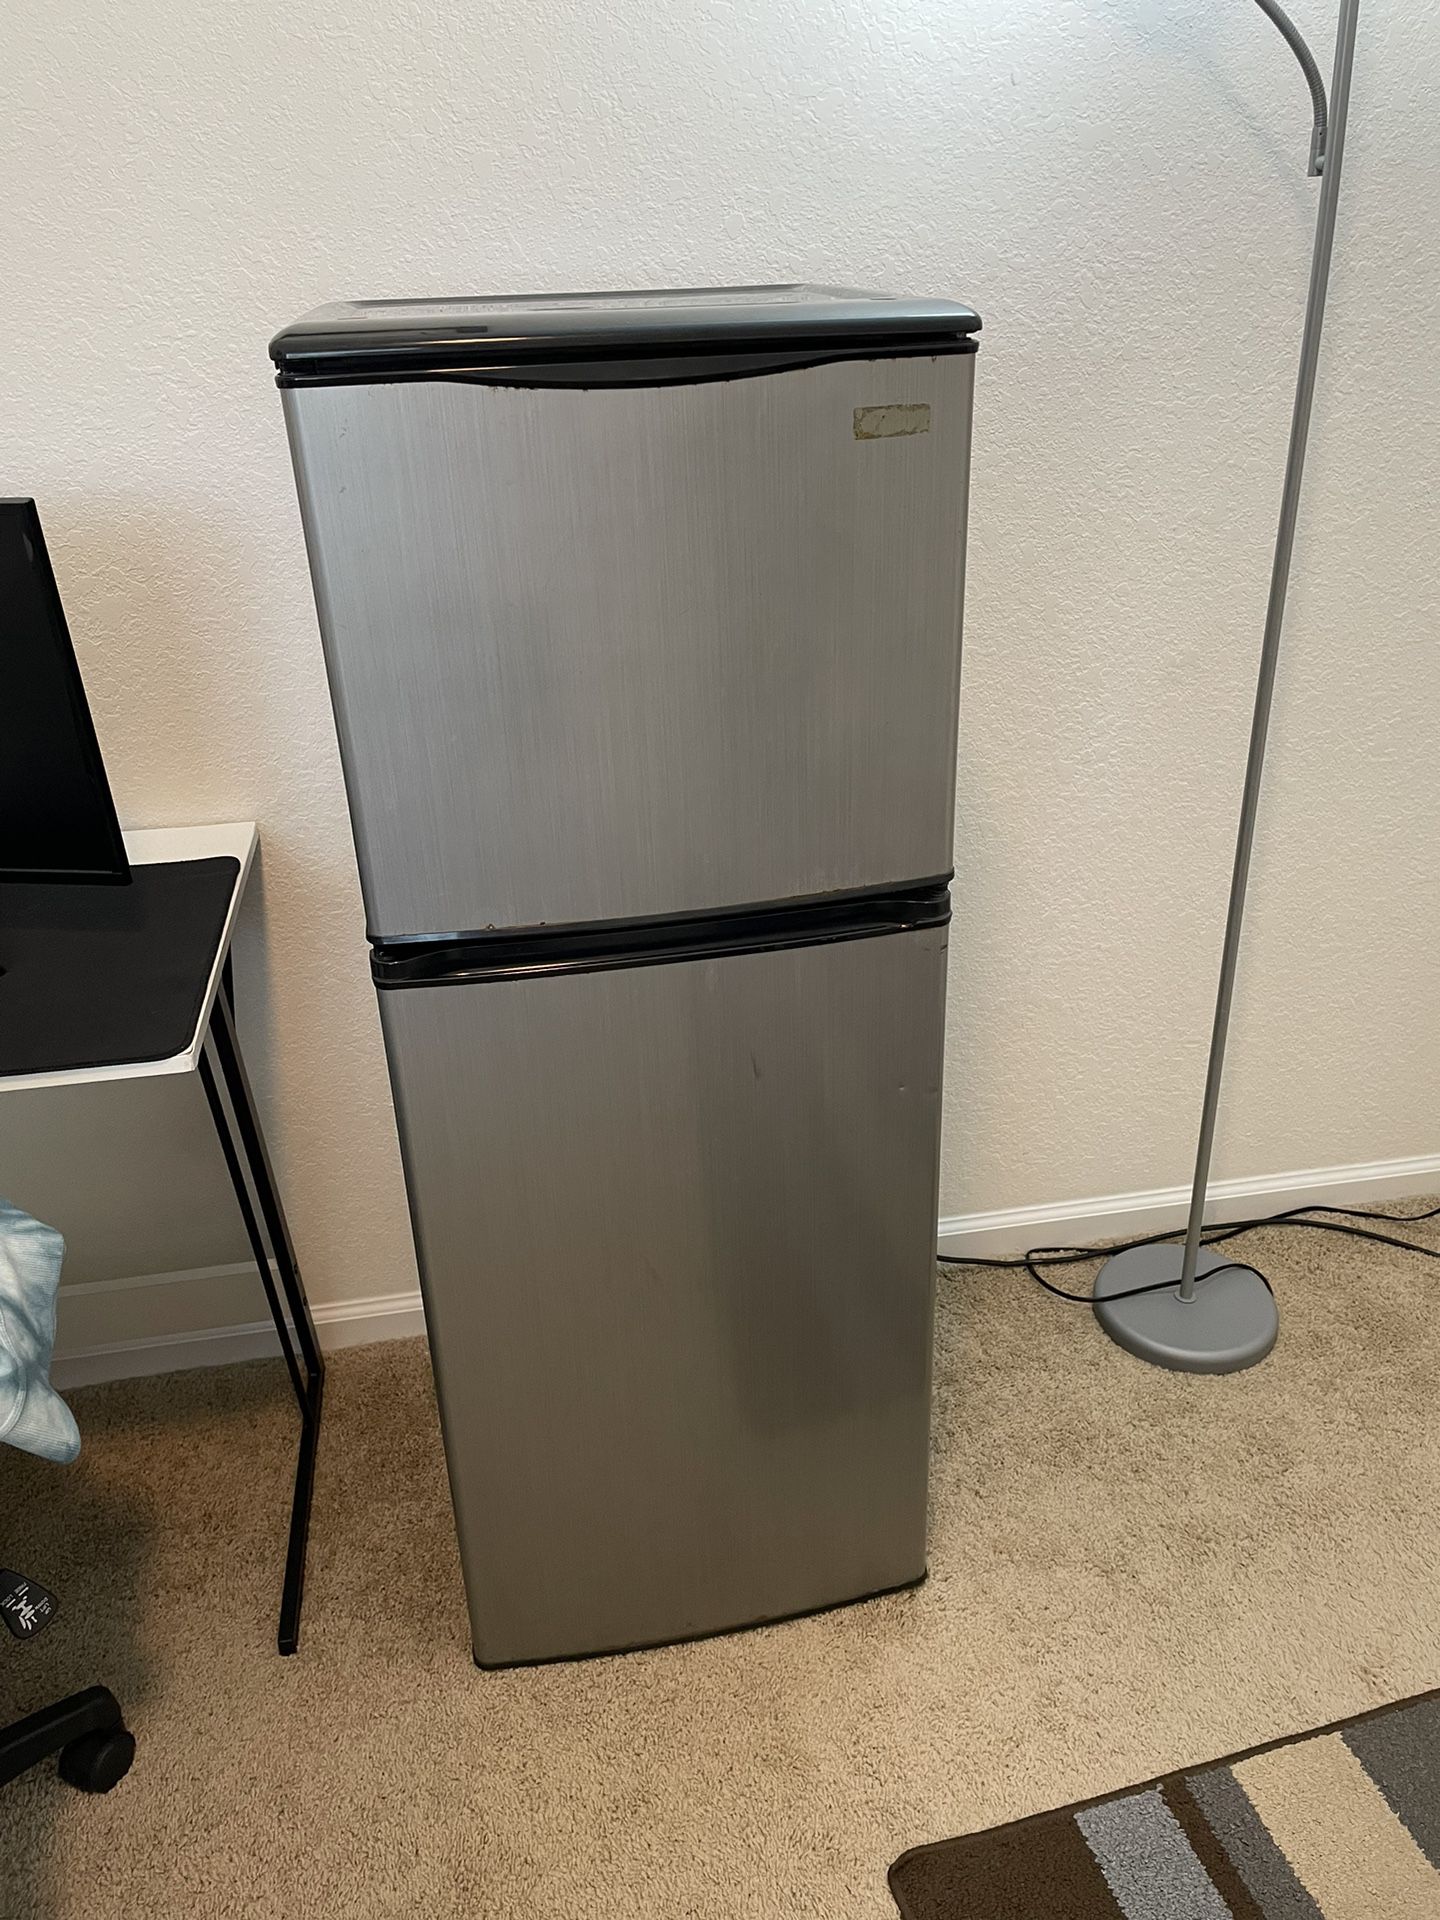 Medium Sized Refrigerator/Freezer